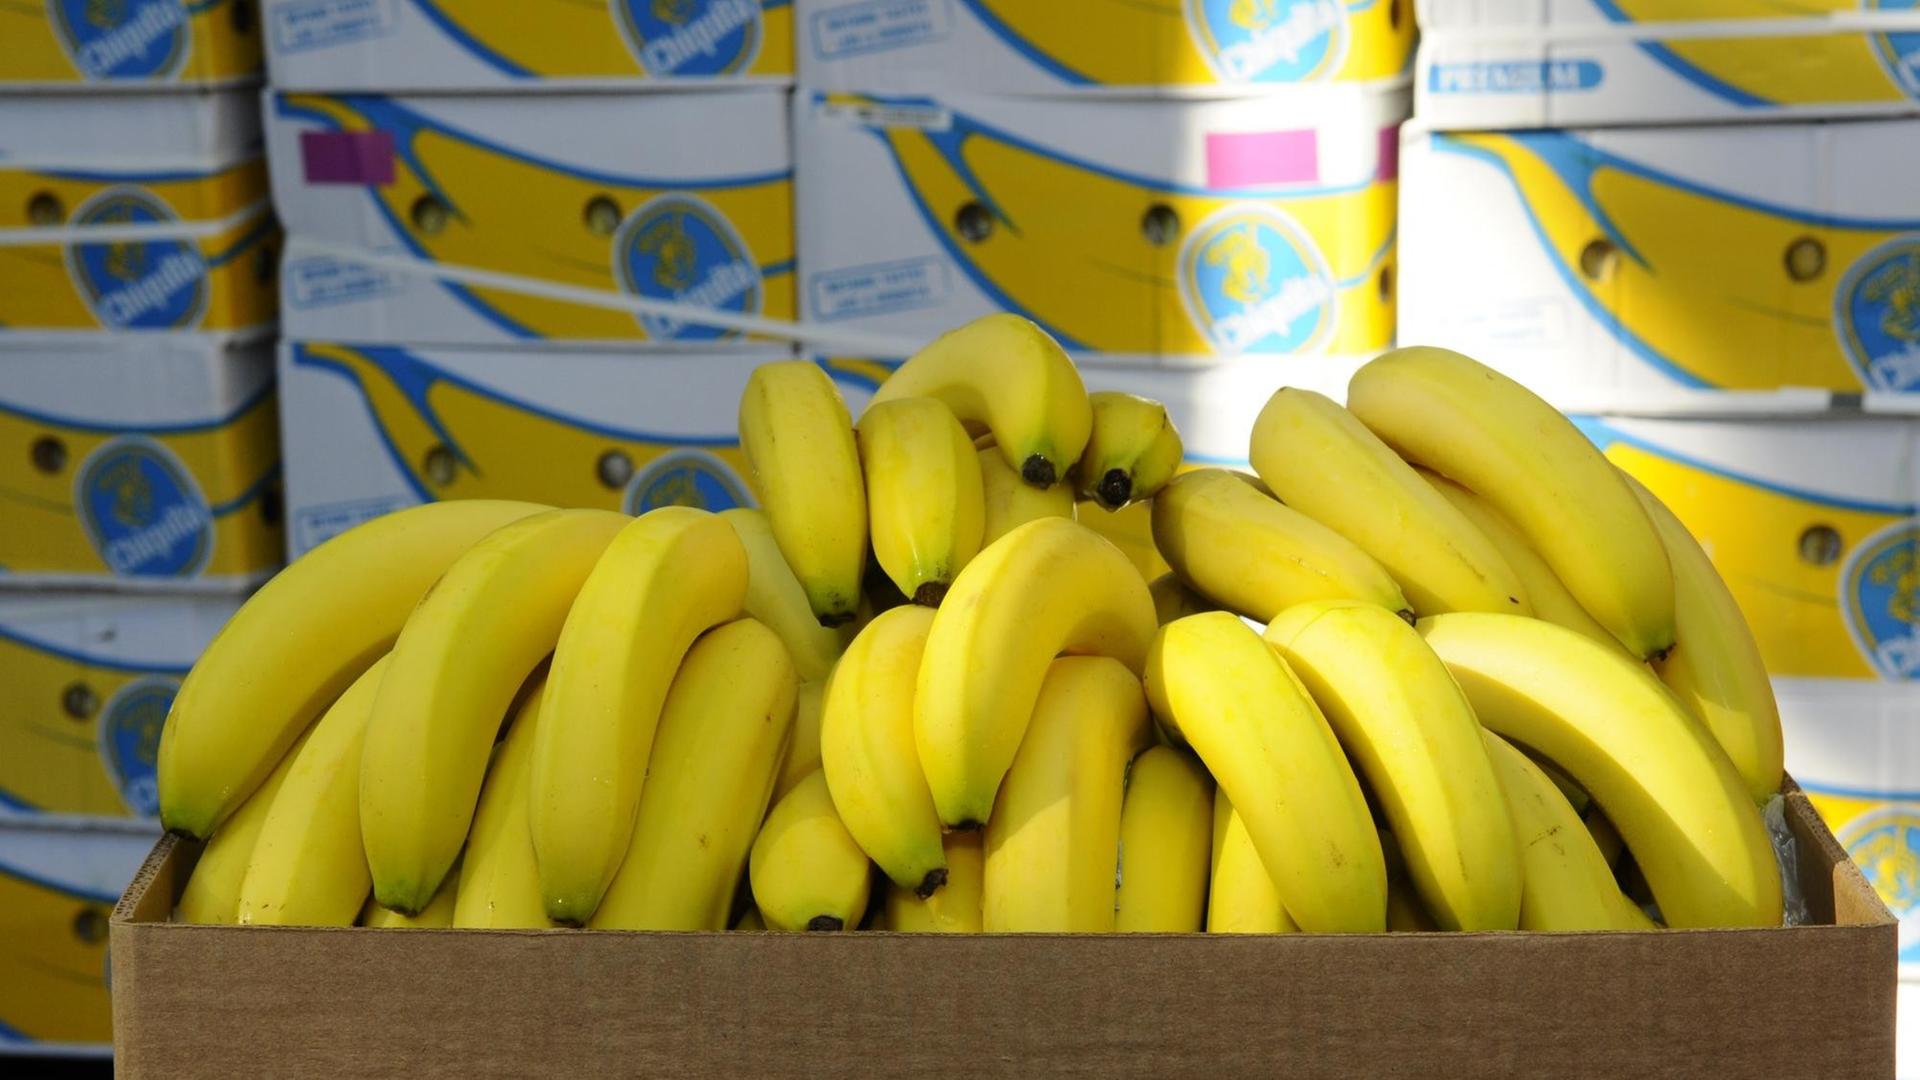 Bananen vor Kisten mit dem Logo des Bananenproduzenten Chiquita